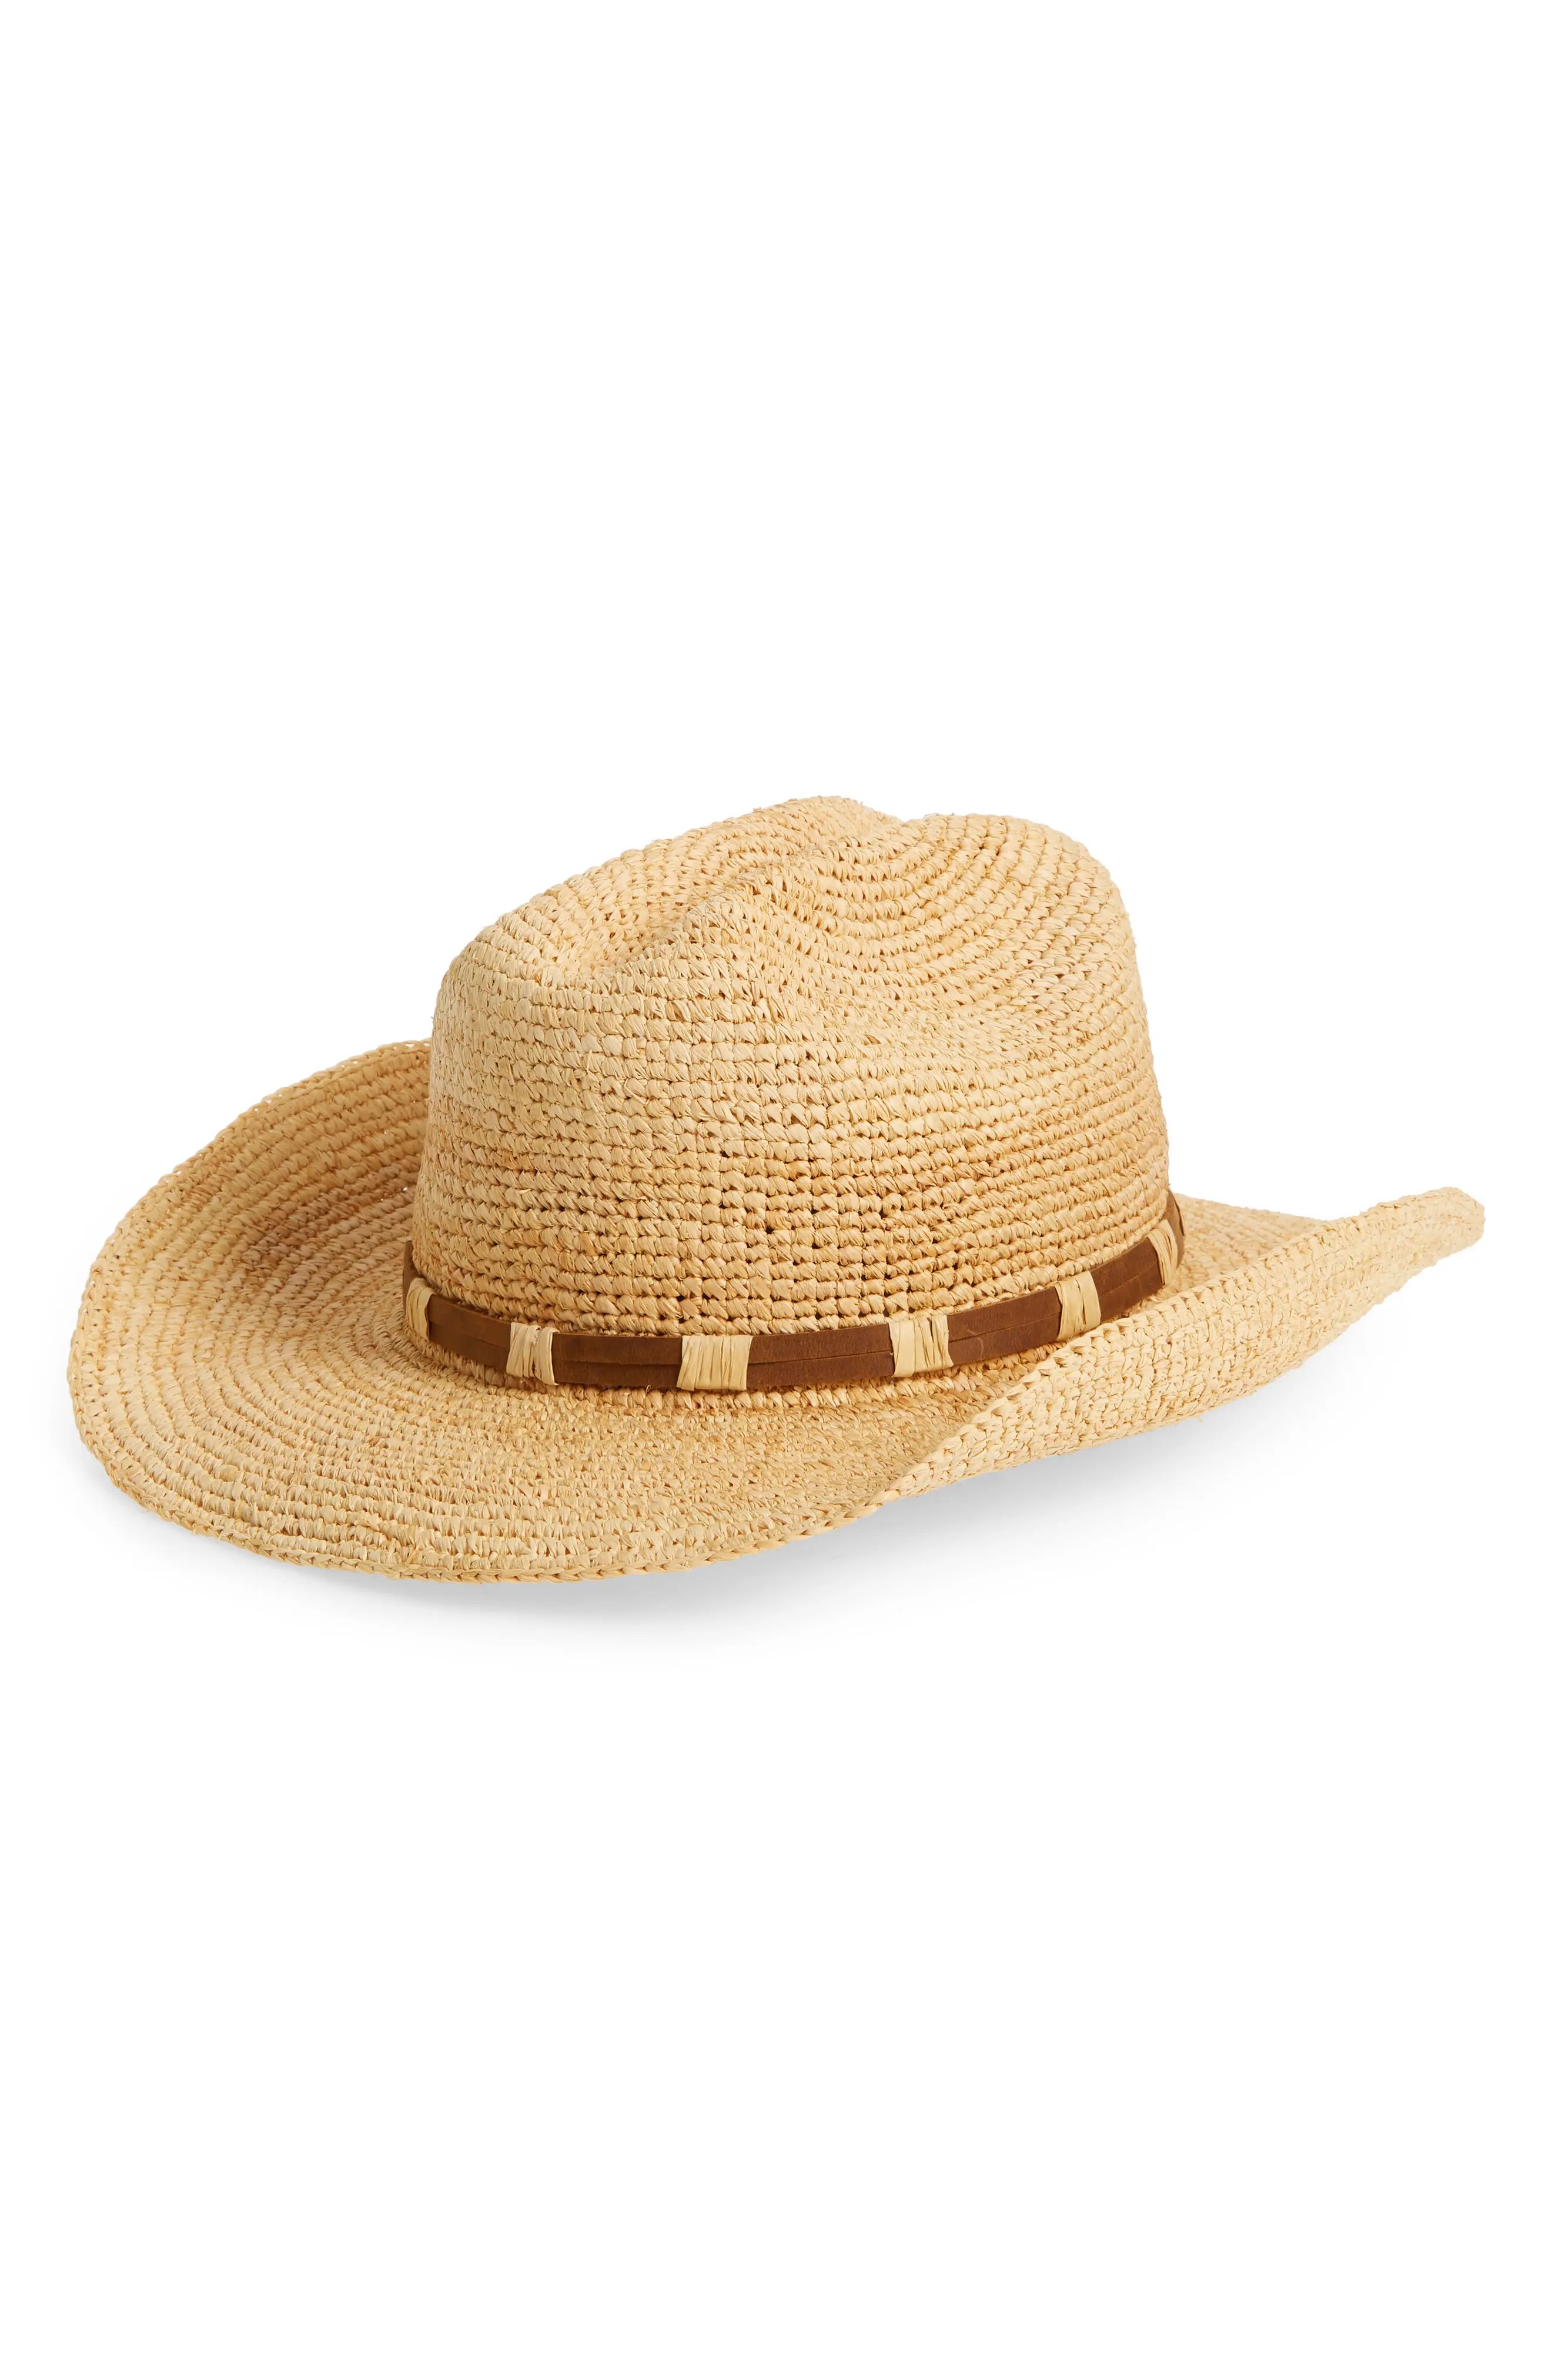 Women's Frye Straw Cowboy Hat, Size Small/Medium - Brown | Nordstrom